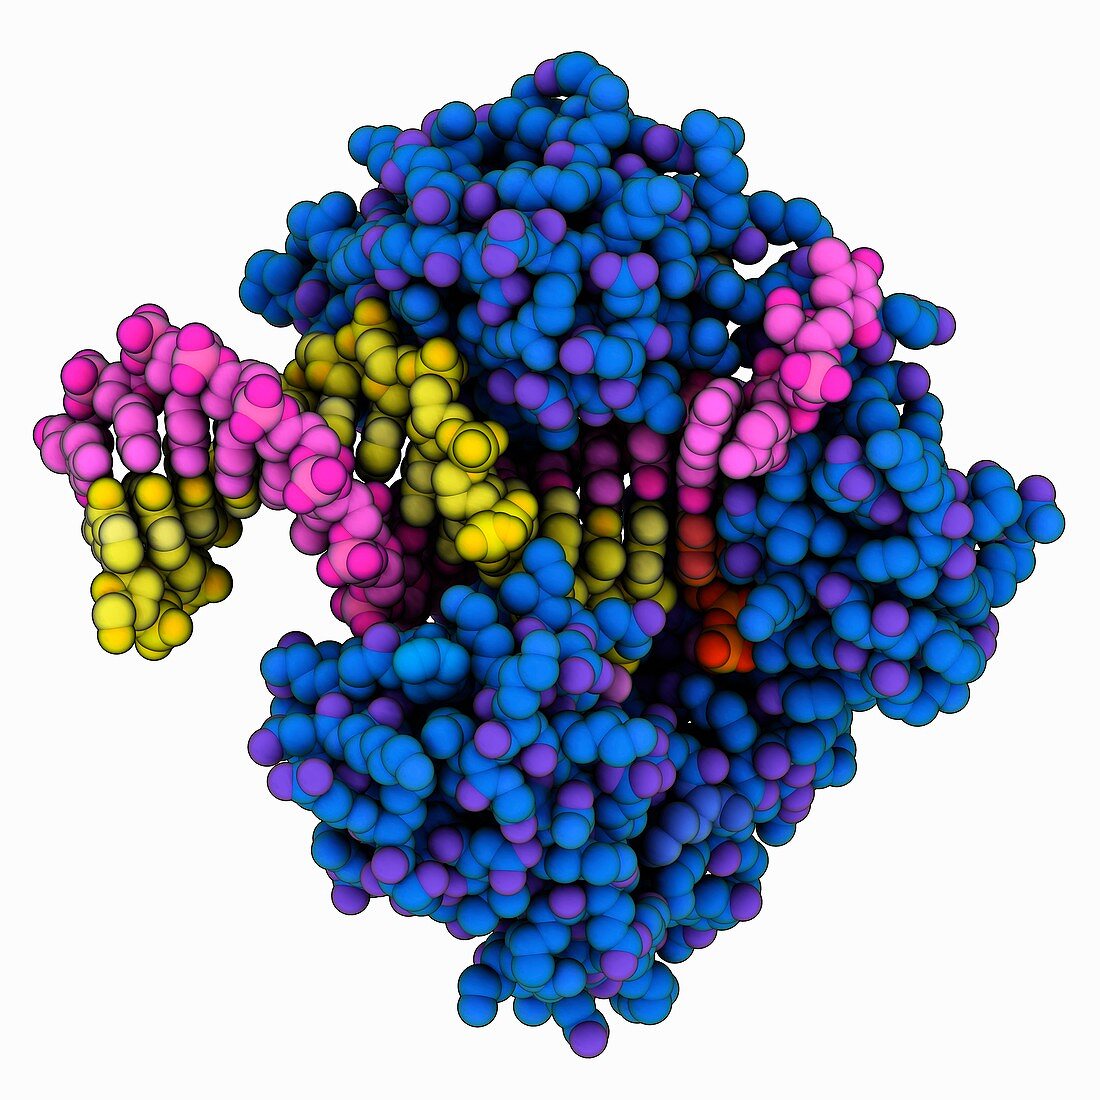 Y-family DNA polymerase DNA complex